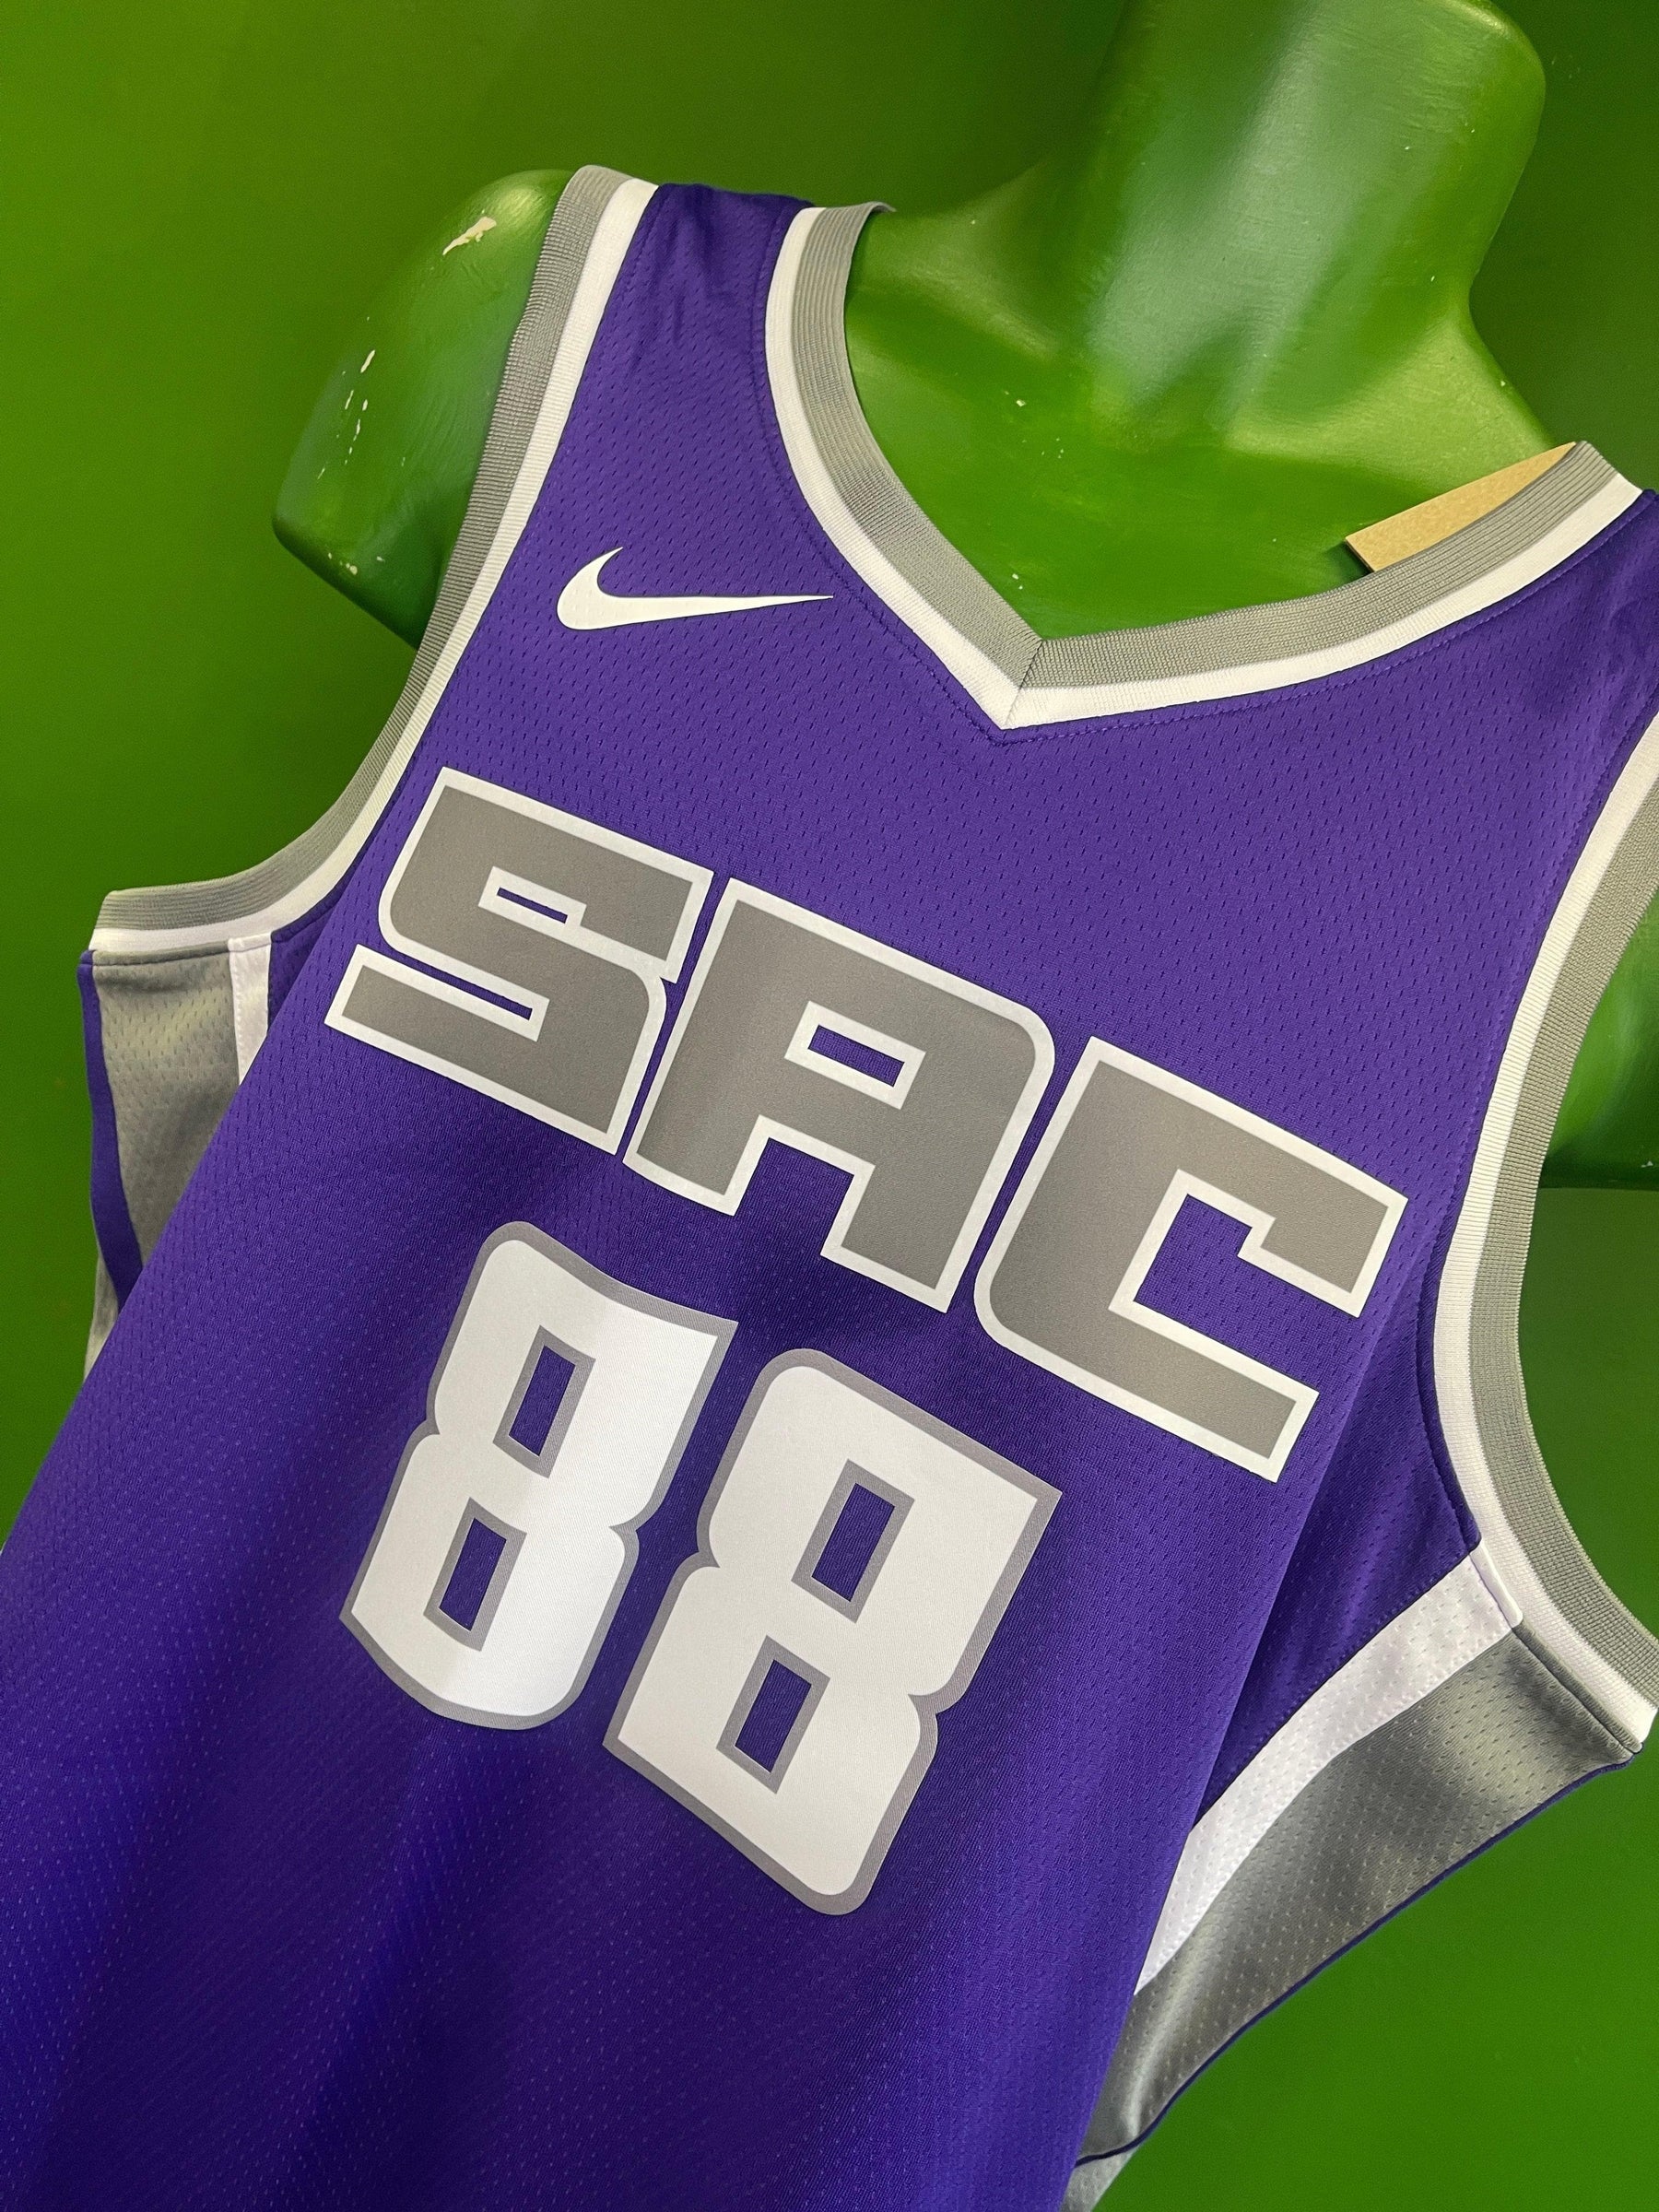 48 Size Sacramento Kings NBA Jerseys for sale